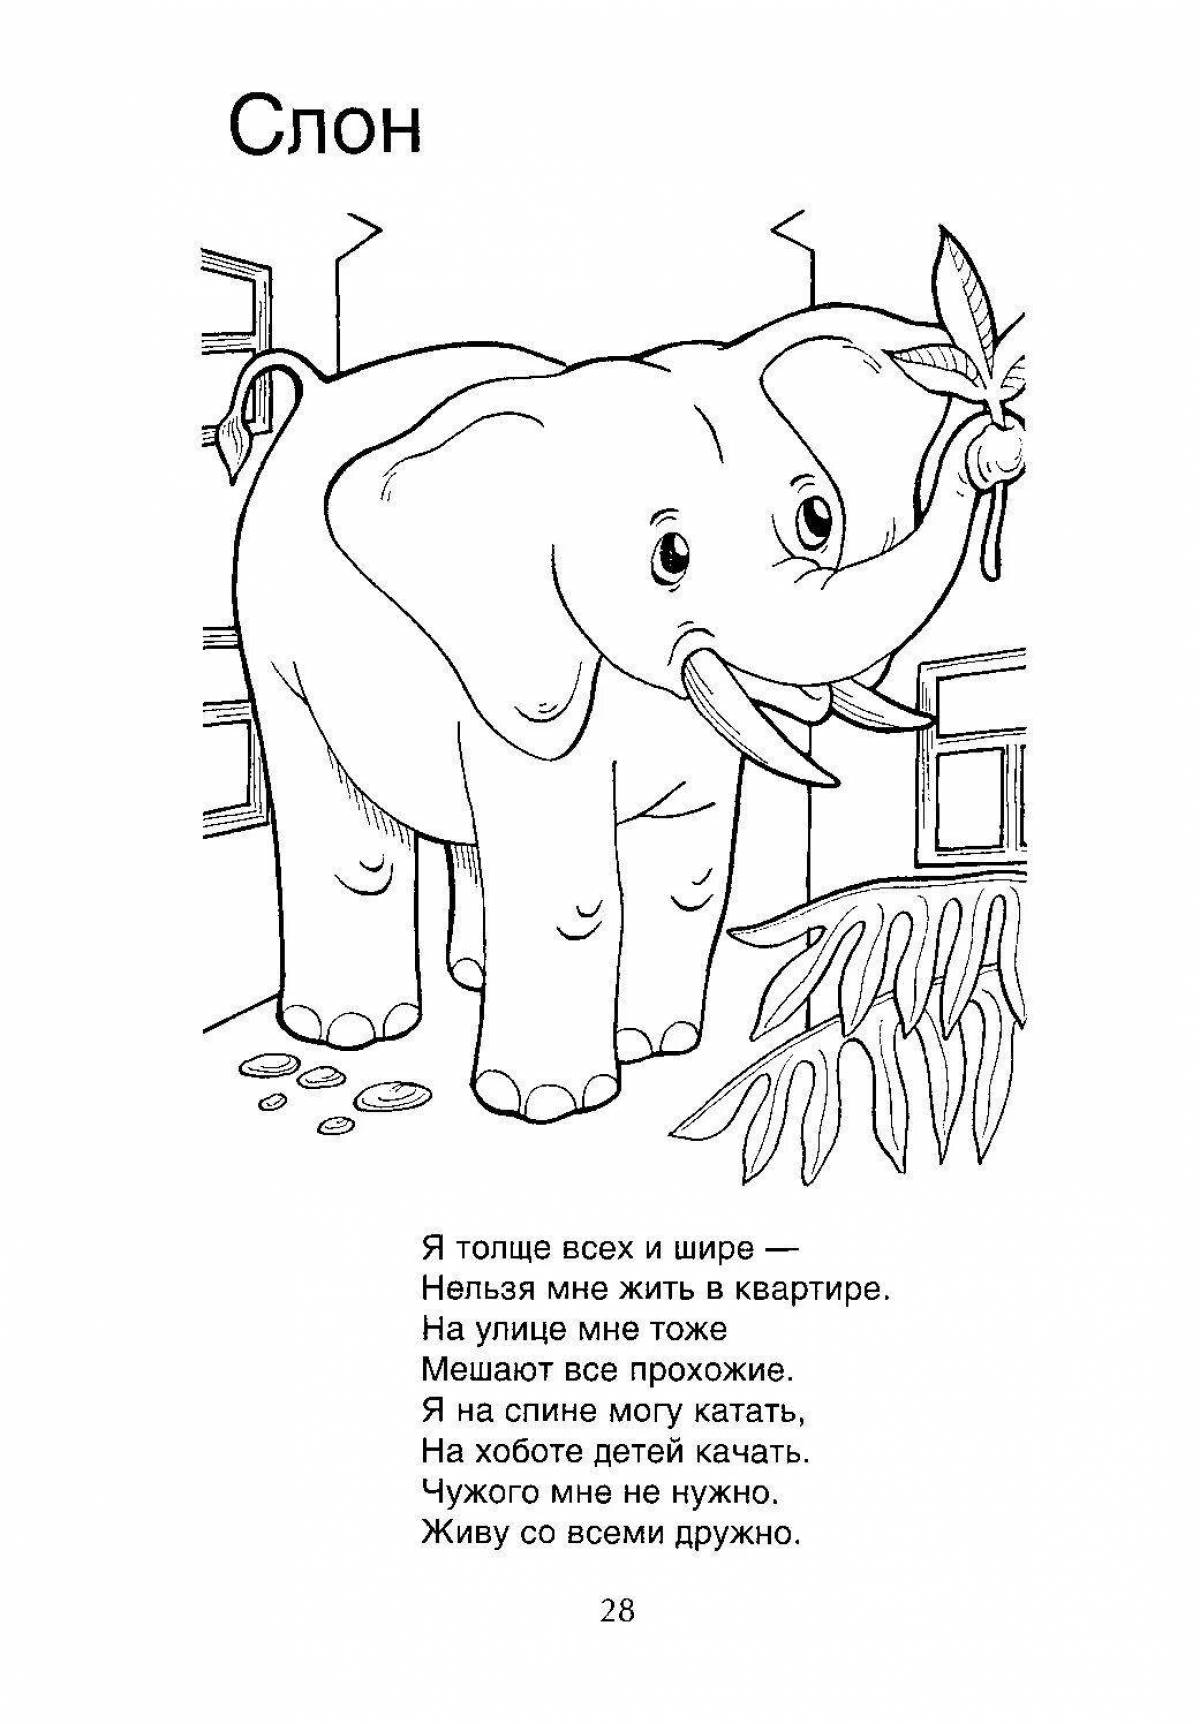 For preschoolers based on barto poetry #5